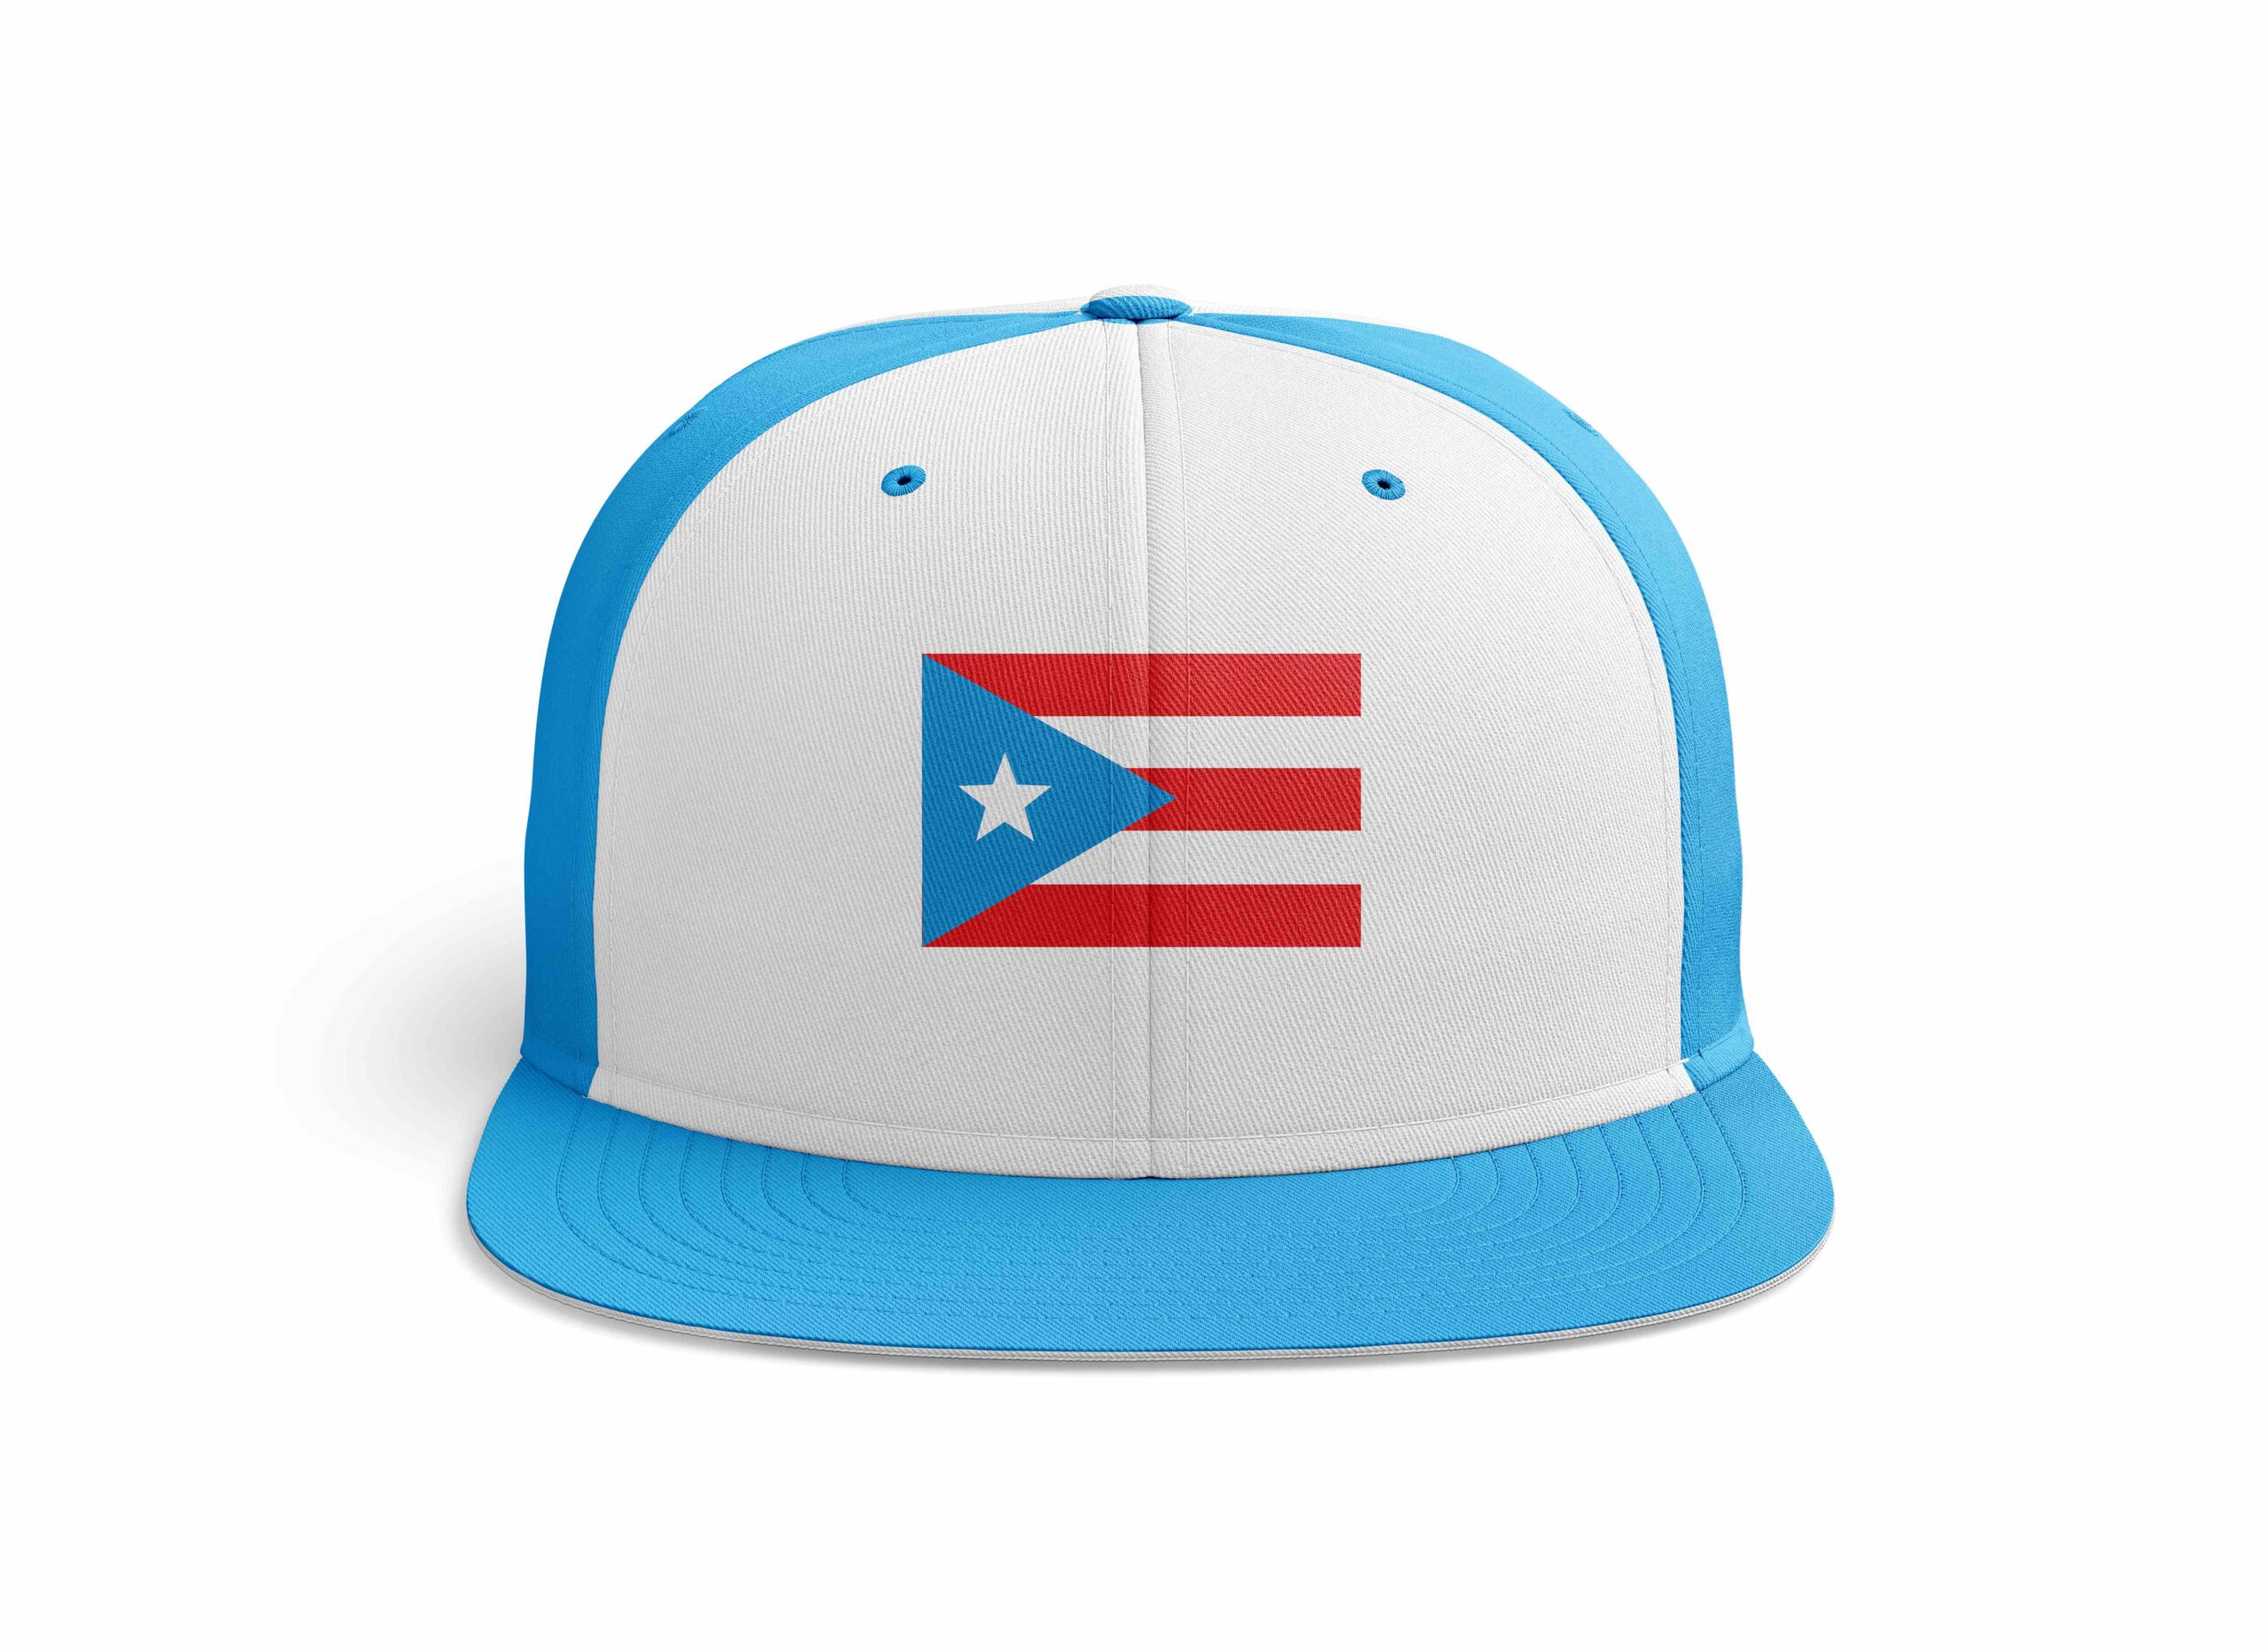 Puerto Rico Hats